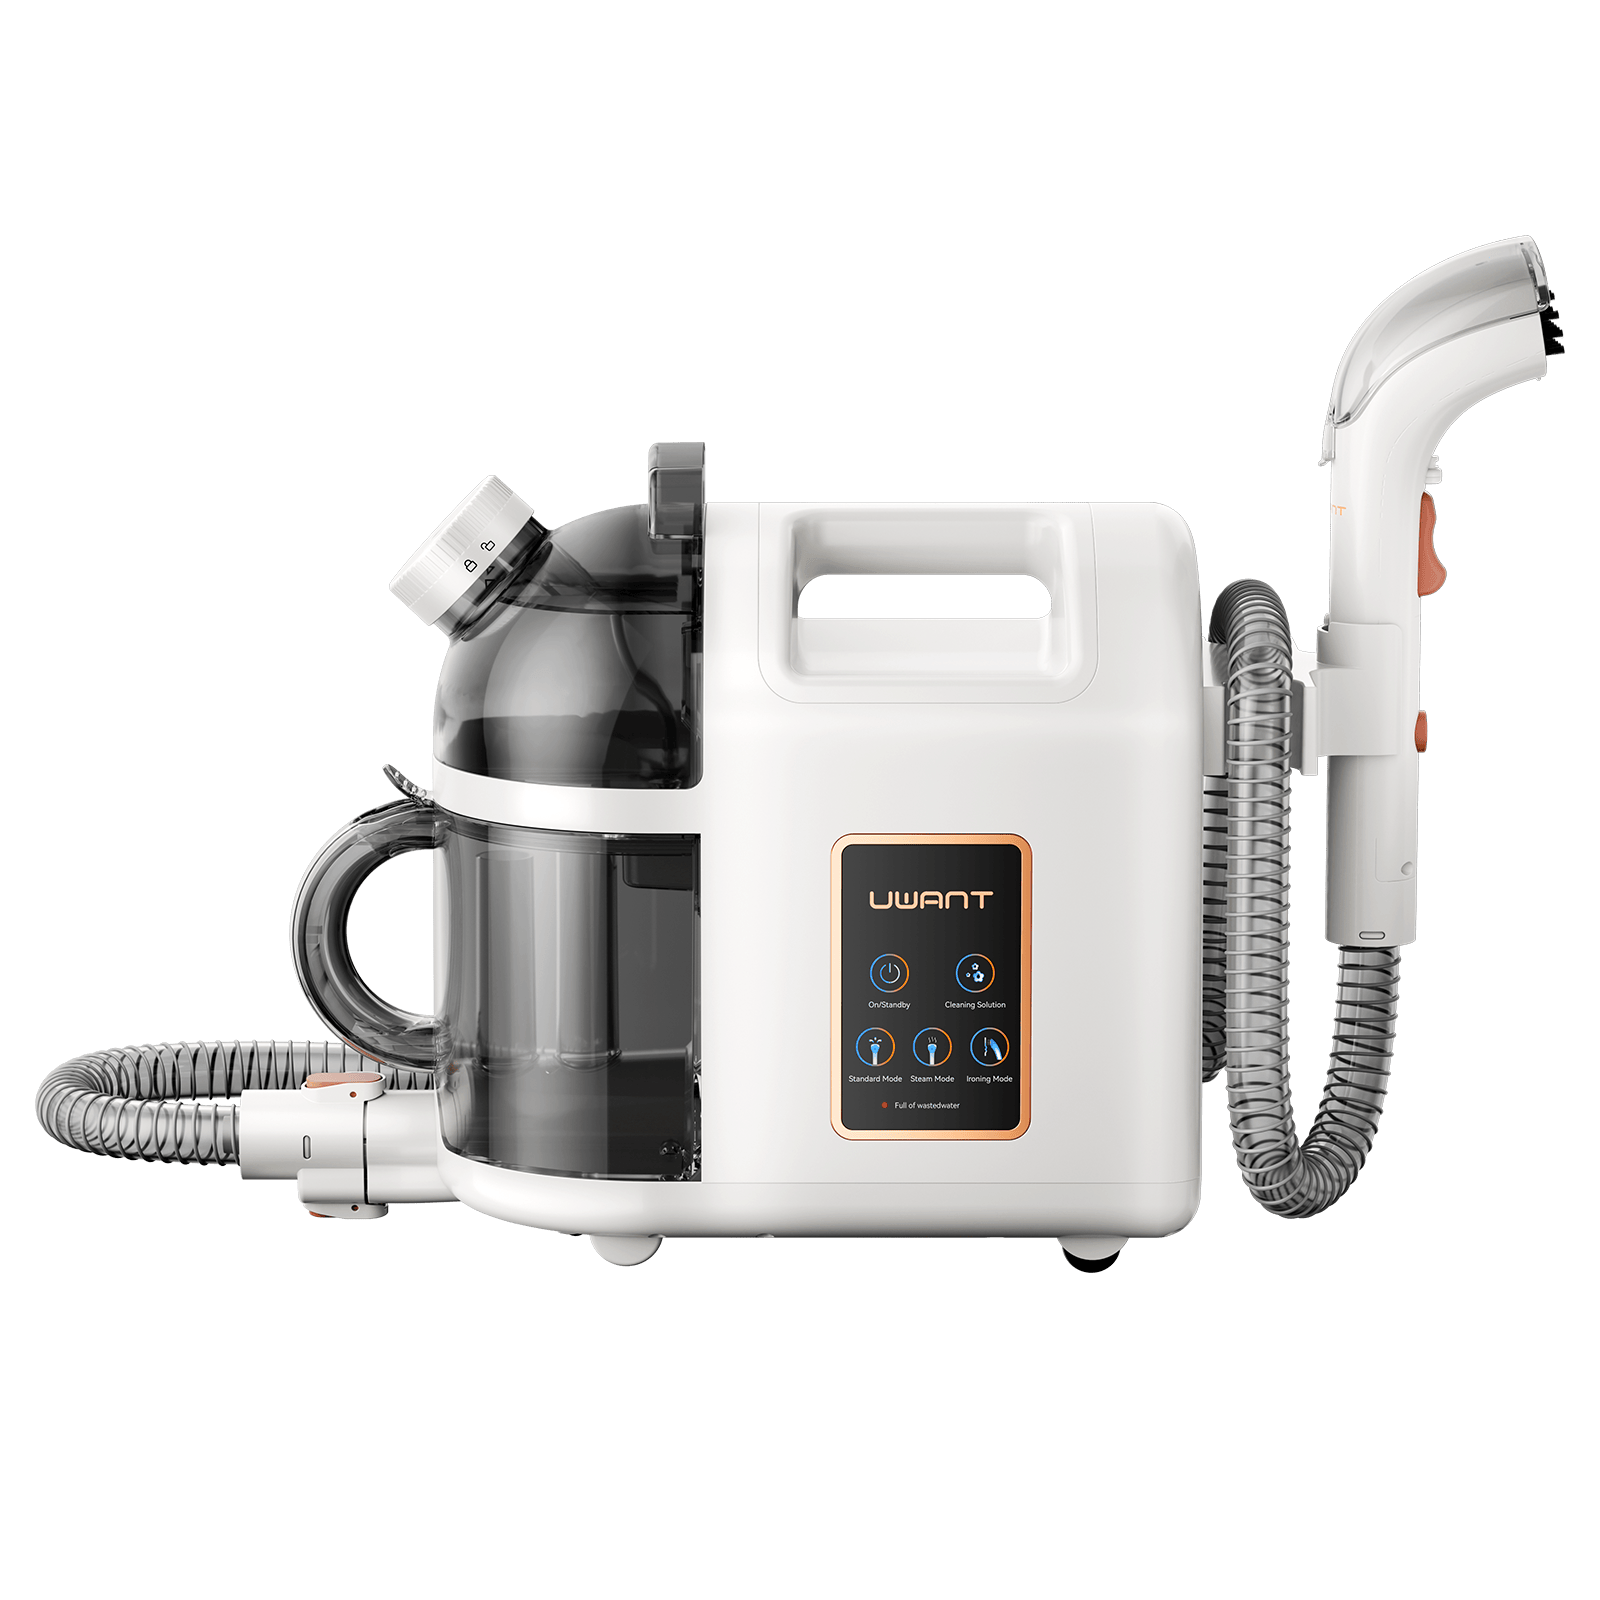 Uwant B200 Vacuum cleaner with steam Modi